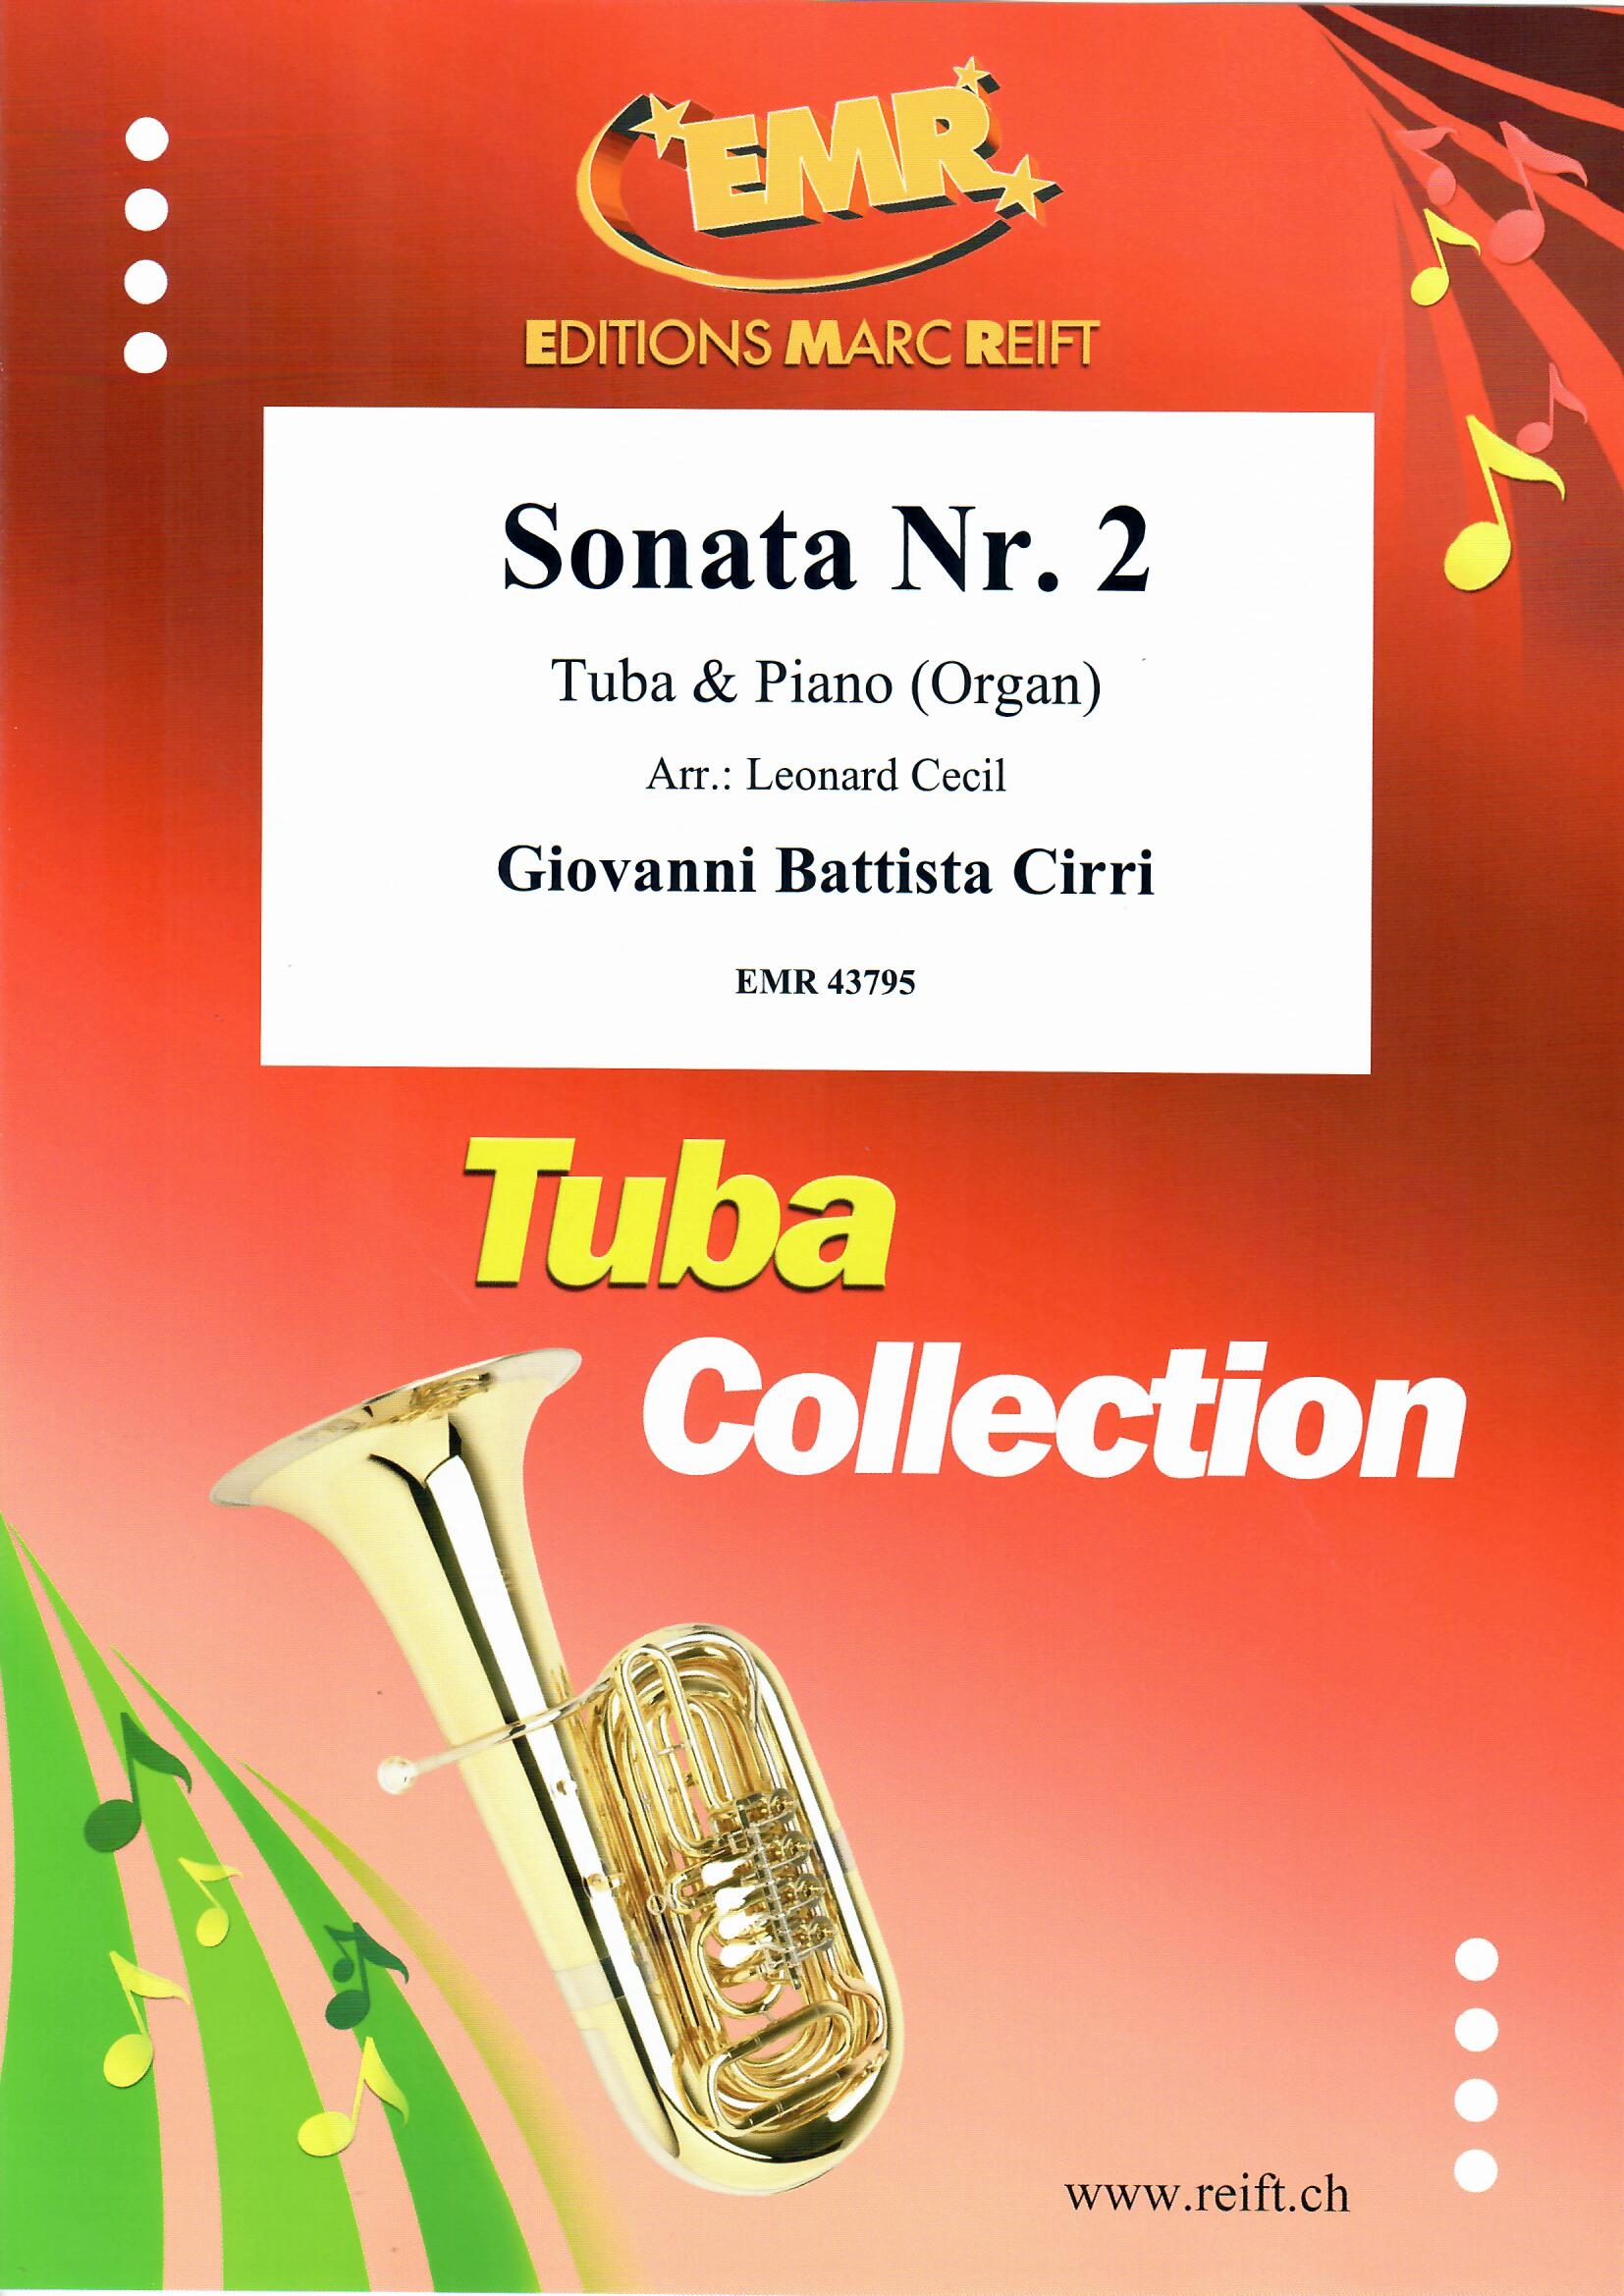 SONATA NR. 2, NEW & RECENT Publications, SOLOS - E♭. Bass